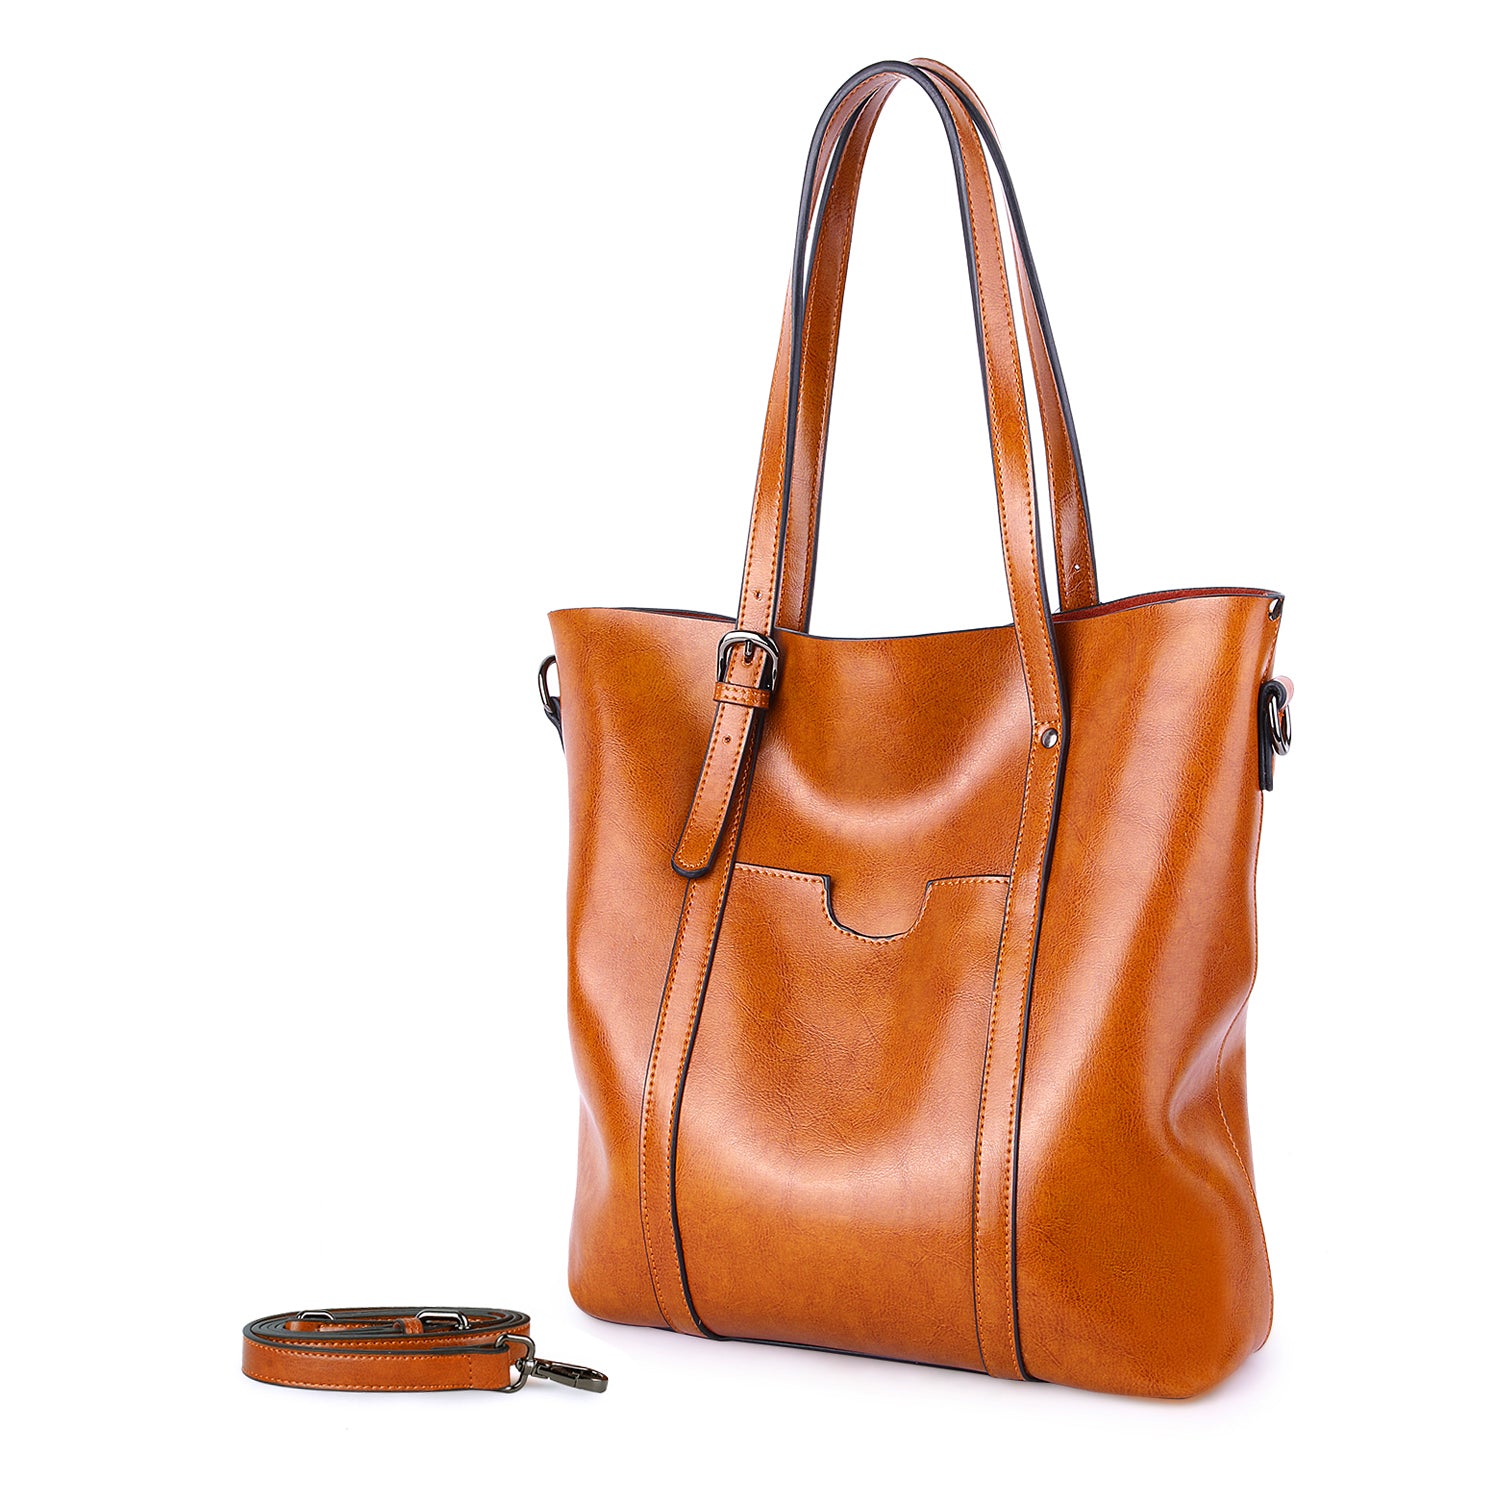 Genuine Leather Tote Women's Shoulder Bag 0925 - Brown